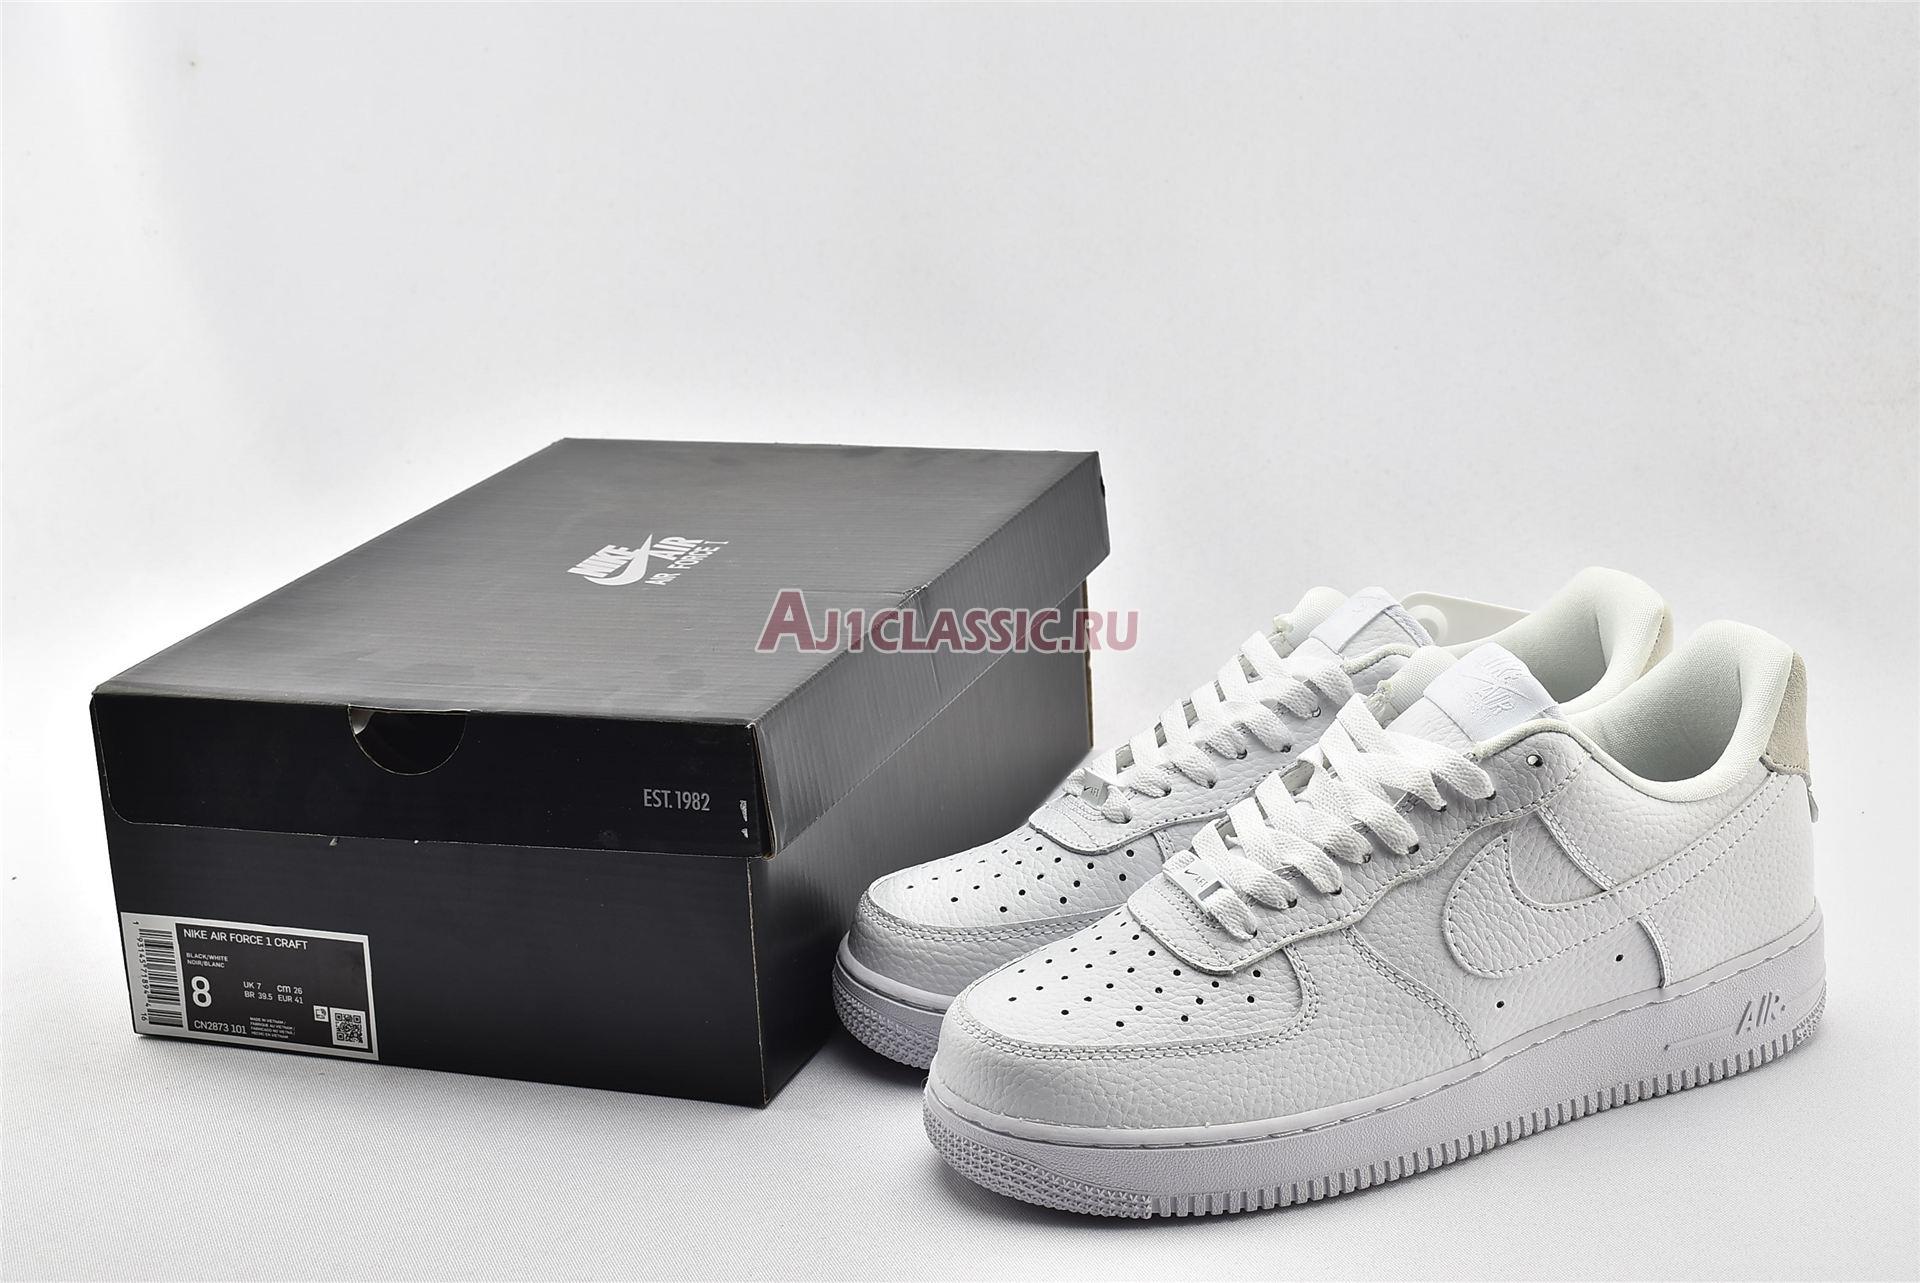 Nike Air Force 1 07 Craft White Vast Grey CN2873-101 White/Summit White/Vast Grey/White Sneakers